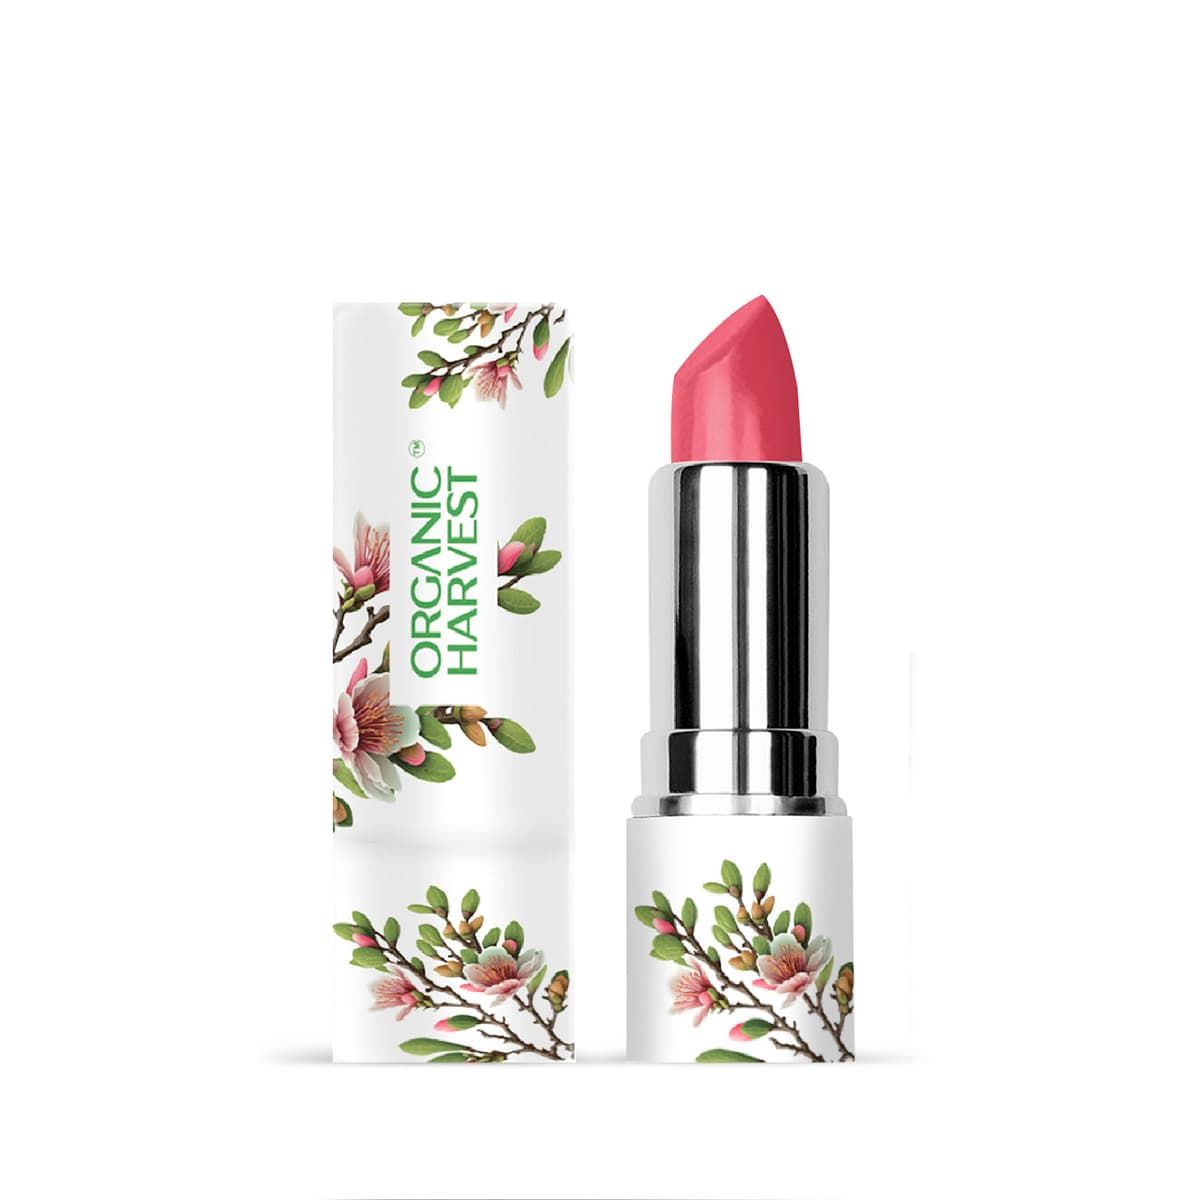 organic harvest organic moisture matte lipstick nepal soft chestnut